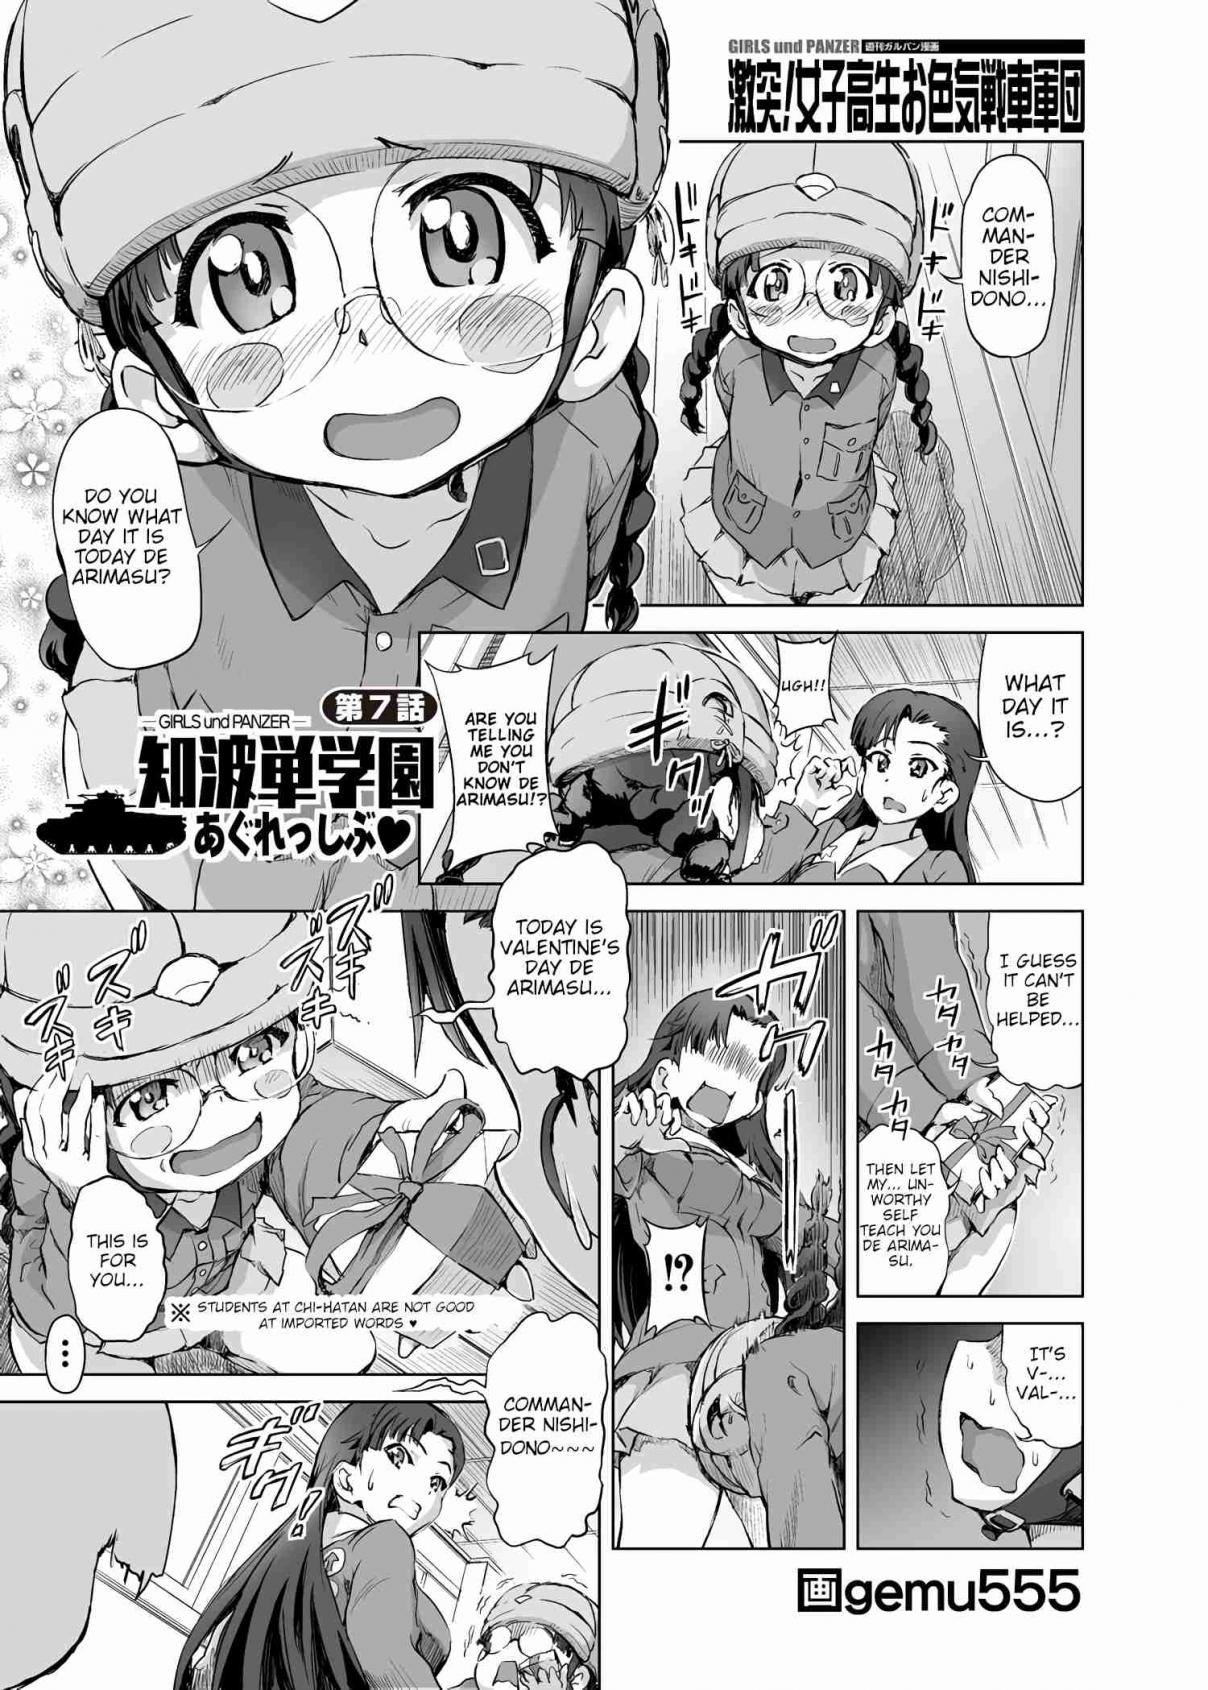 Girls und Panzer Chi HaTan Academy Aggressive (Doujinshi) Vol. 1 Ch. 7